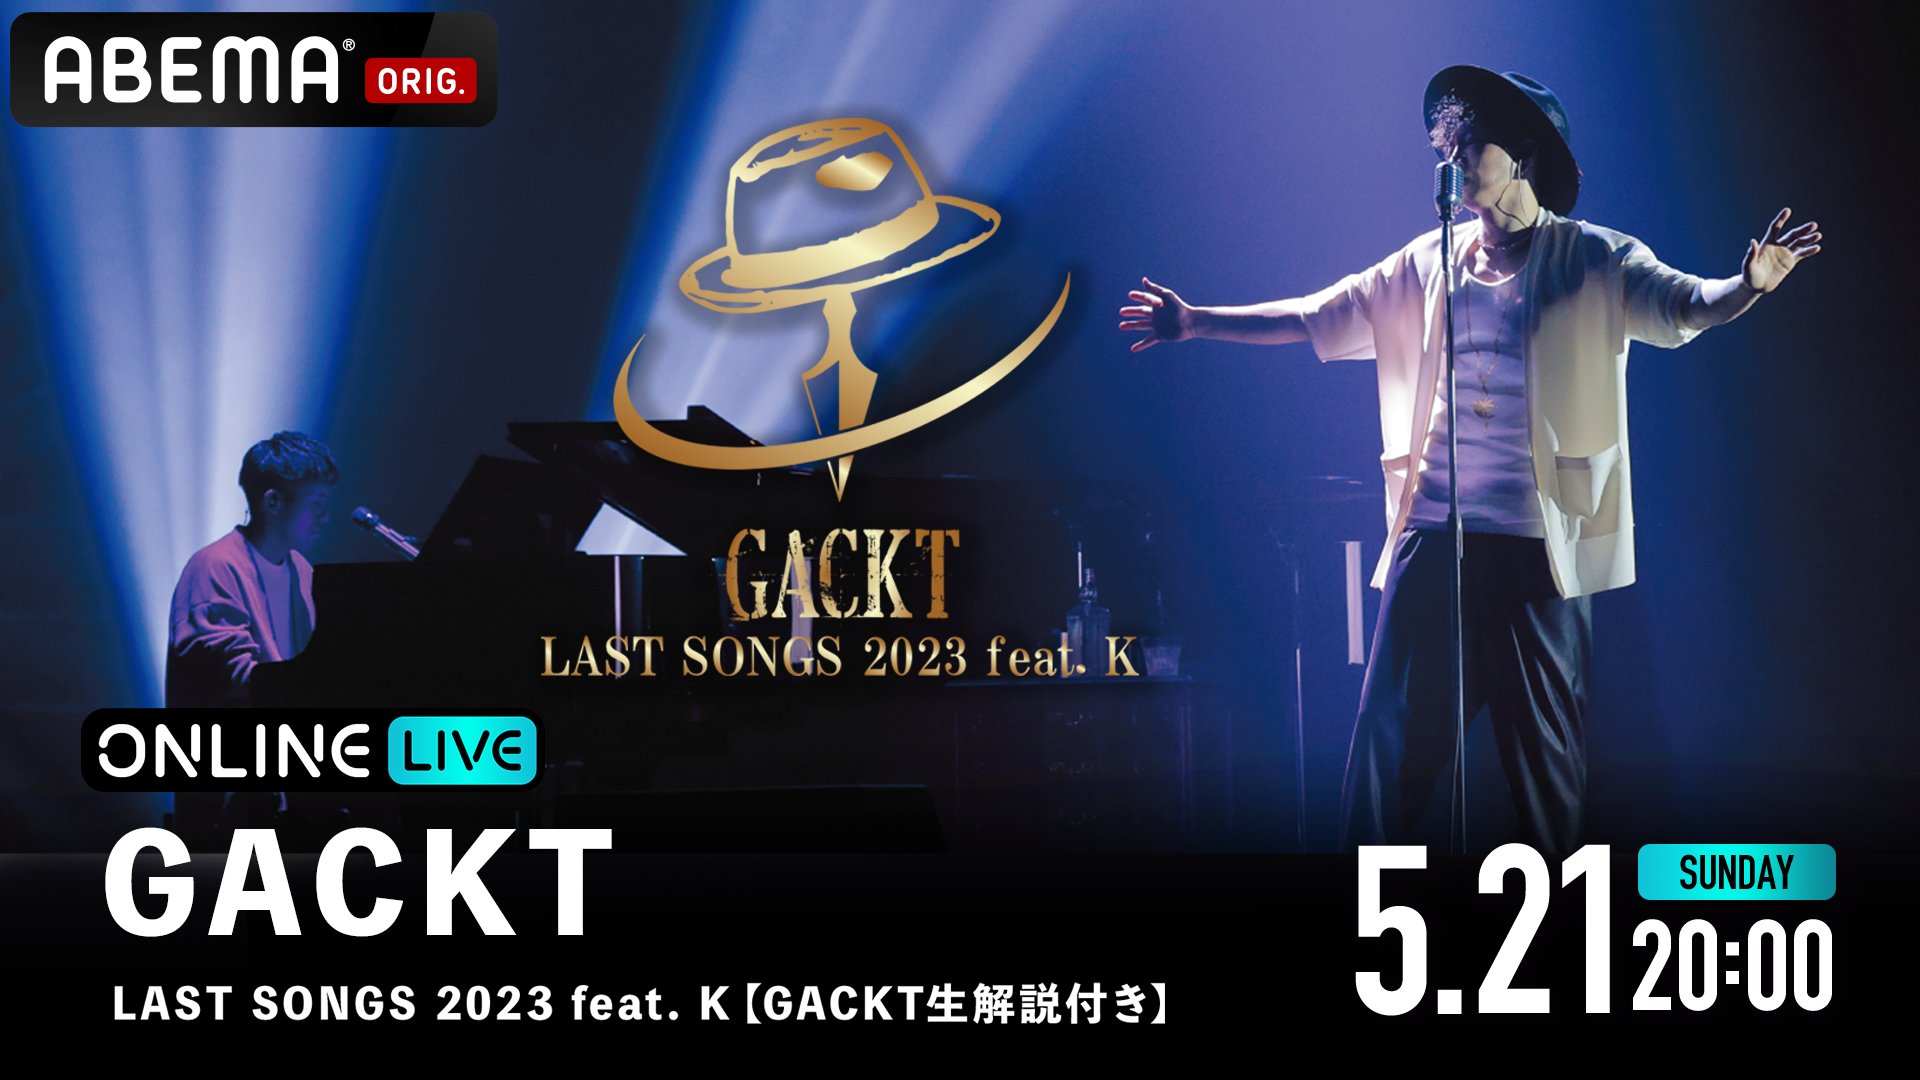 GACKT LAST SONGS 2023 feat. K』を5月21日(日)20時よりGACKT本人の生 